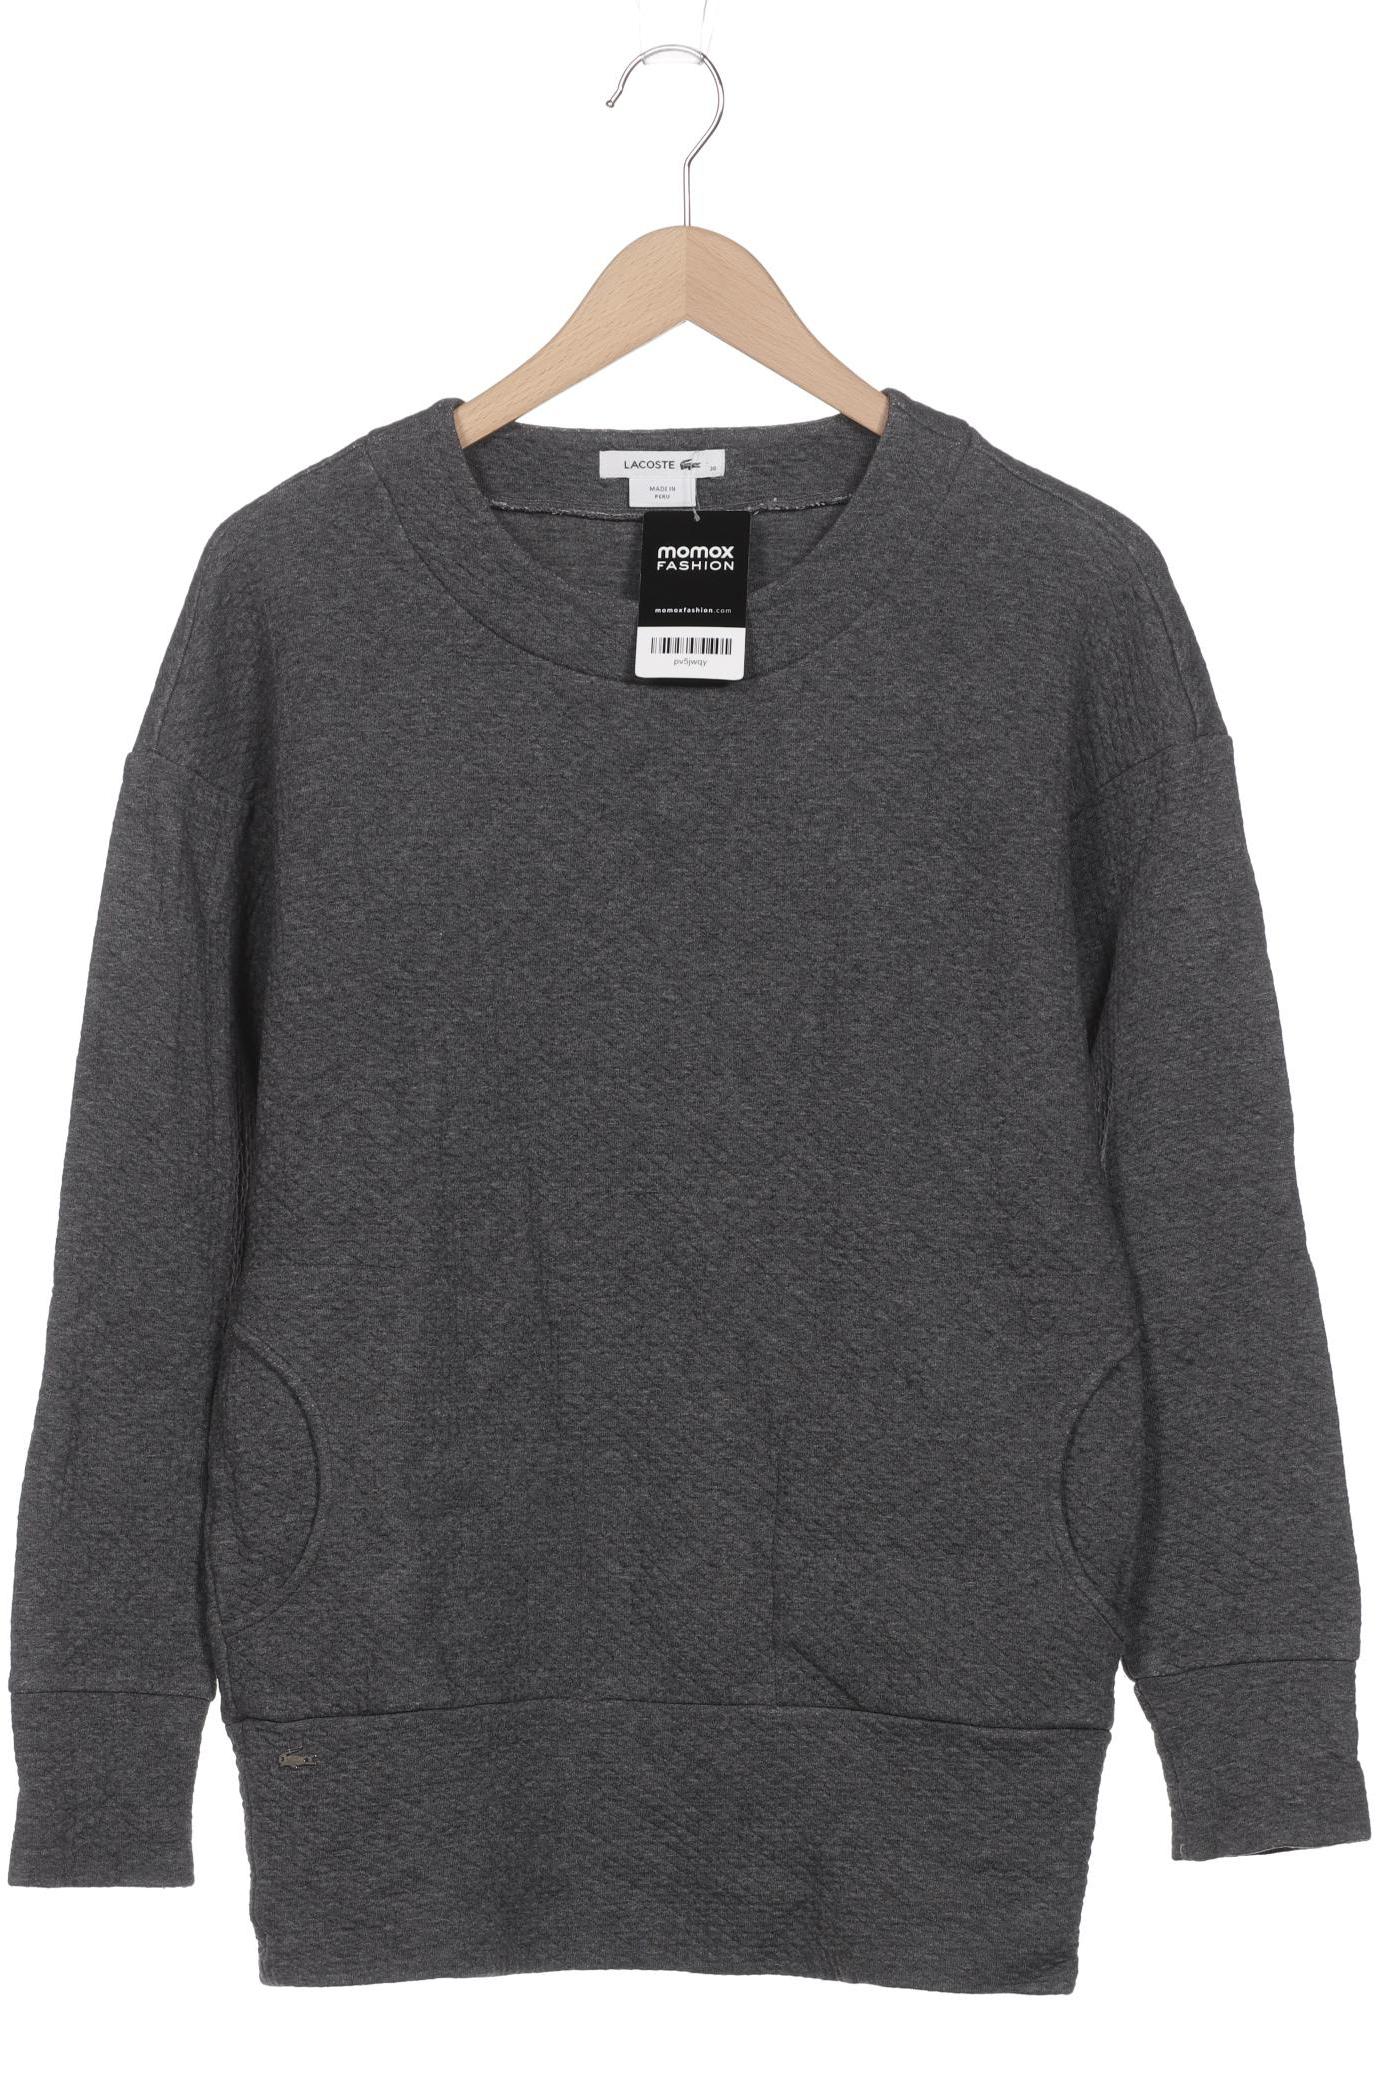 Lacoste Damen Sweatshirt, grau, Gr. 36 von Lacoste